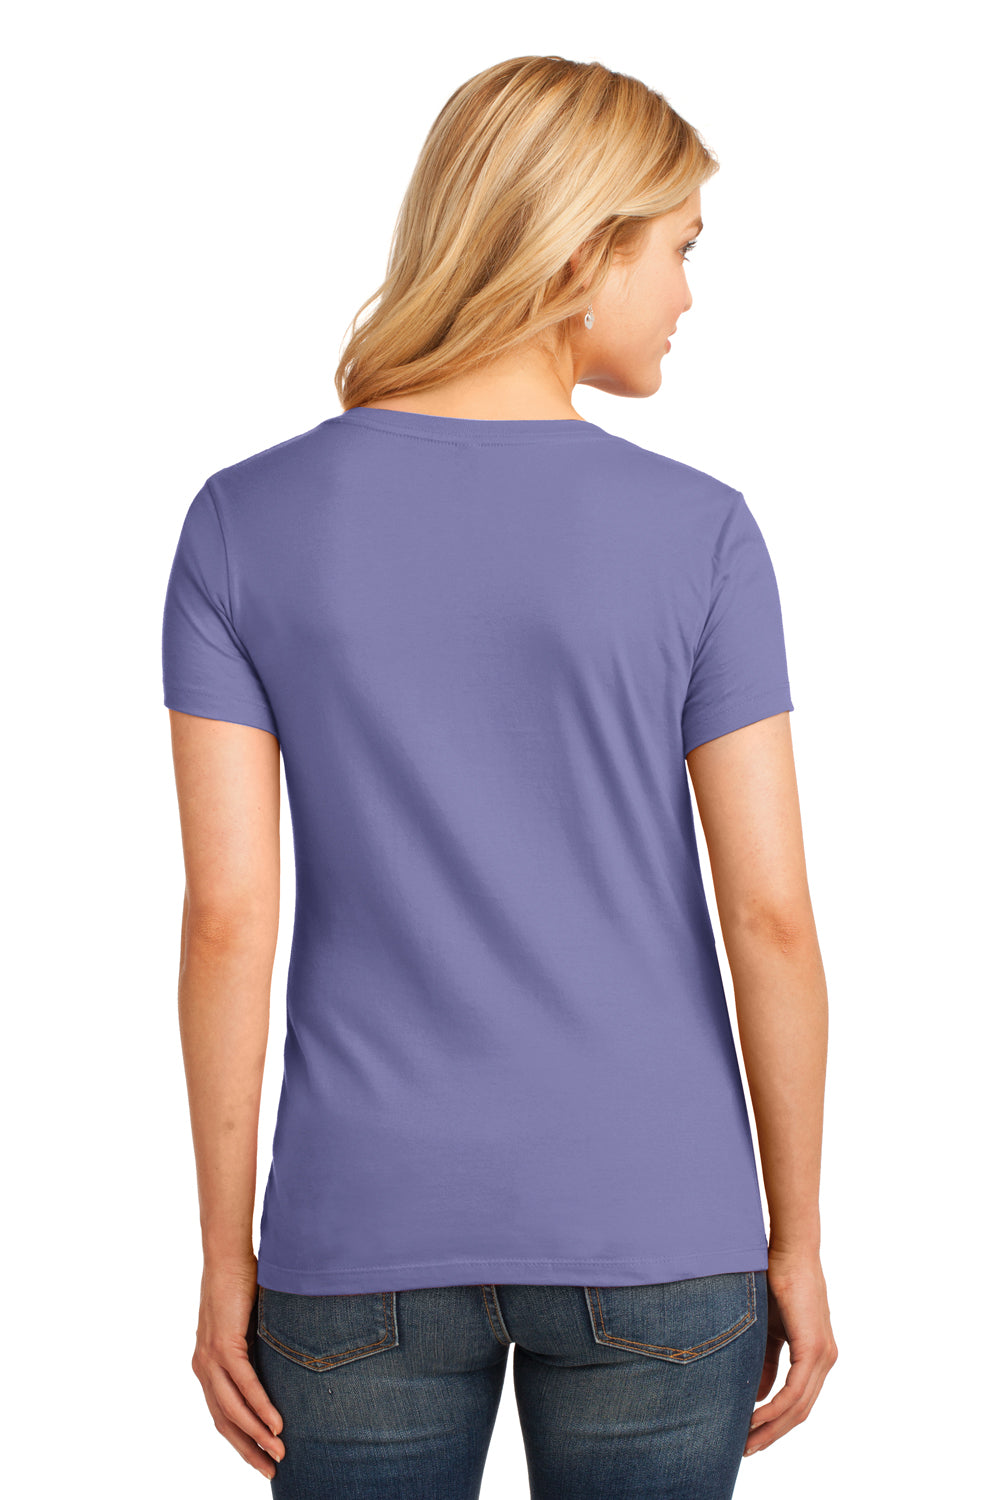 Port & Company LPC54V Womens Core Short Sleeve V-Neck T-Shirt Violet Purple Back